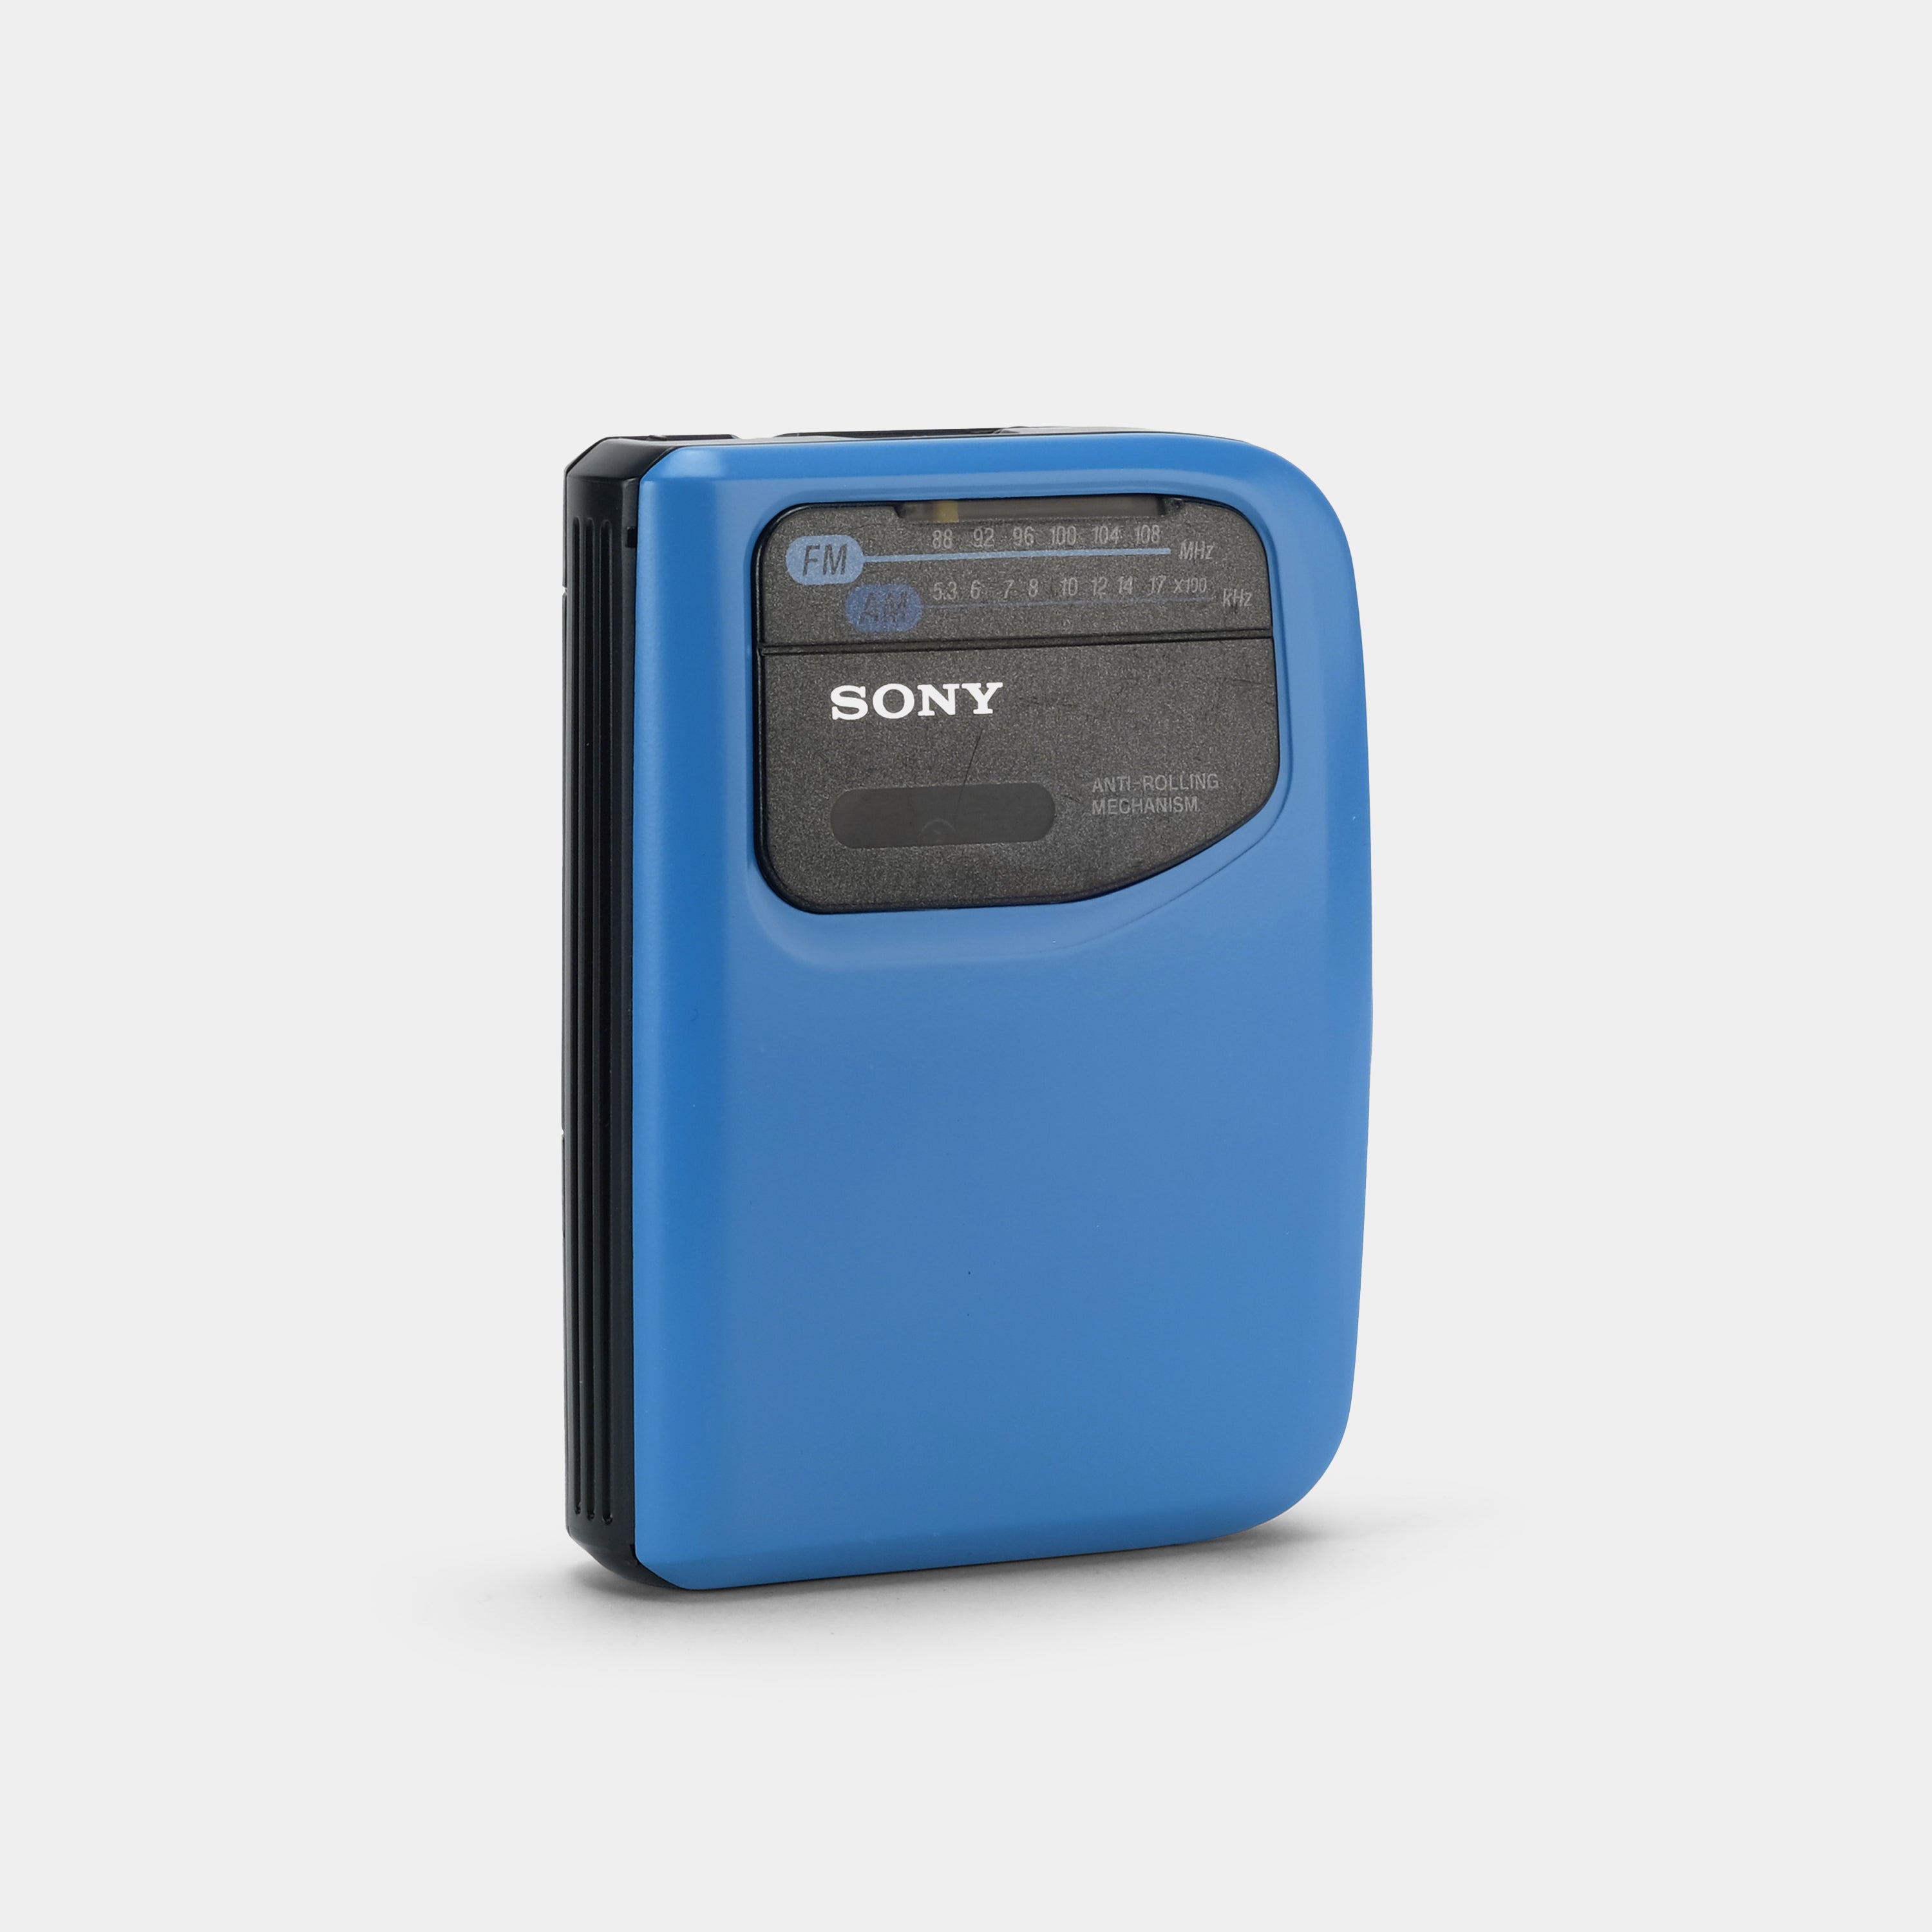 Sony Walkman WM-FX101 AM/FM Blue Portable Cassette Player